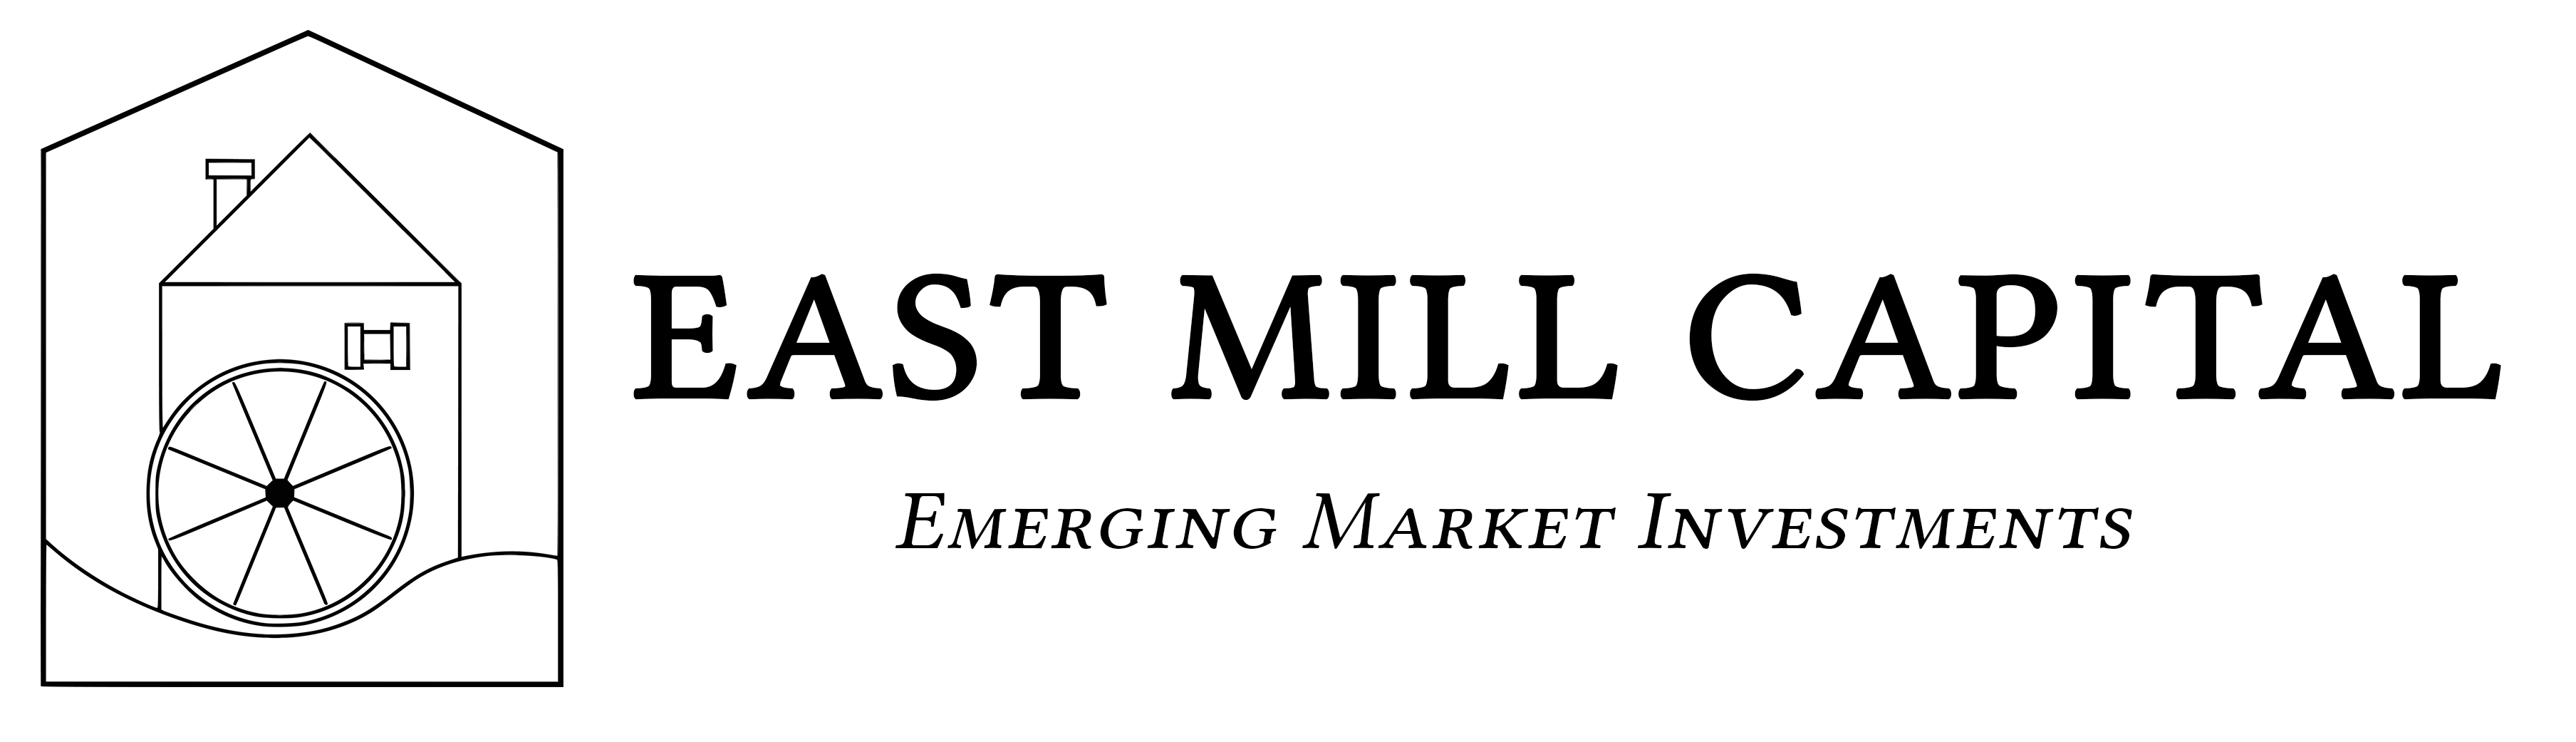 East Mill Capital